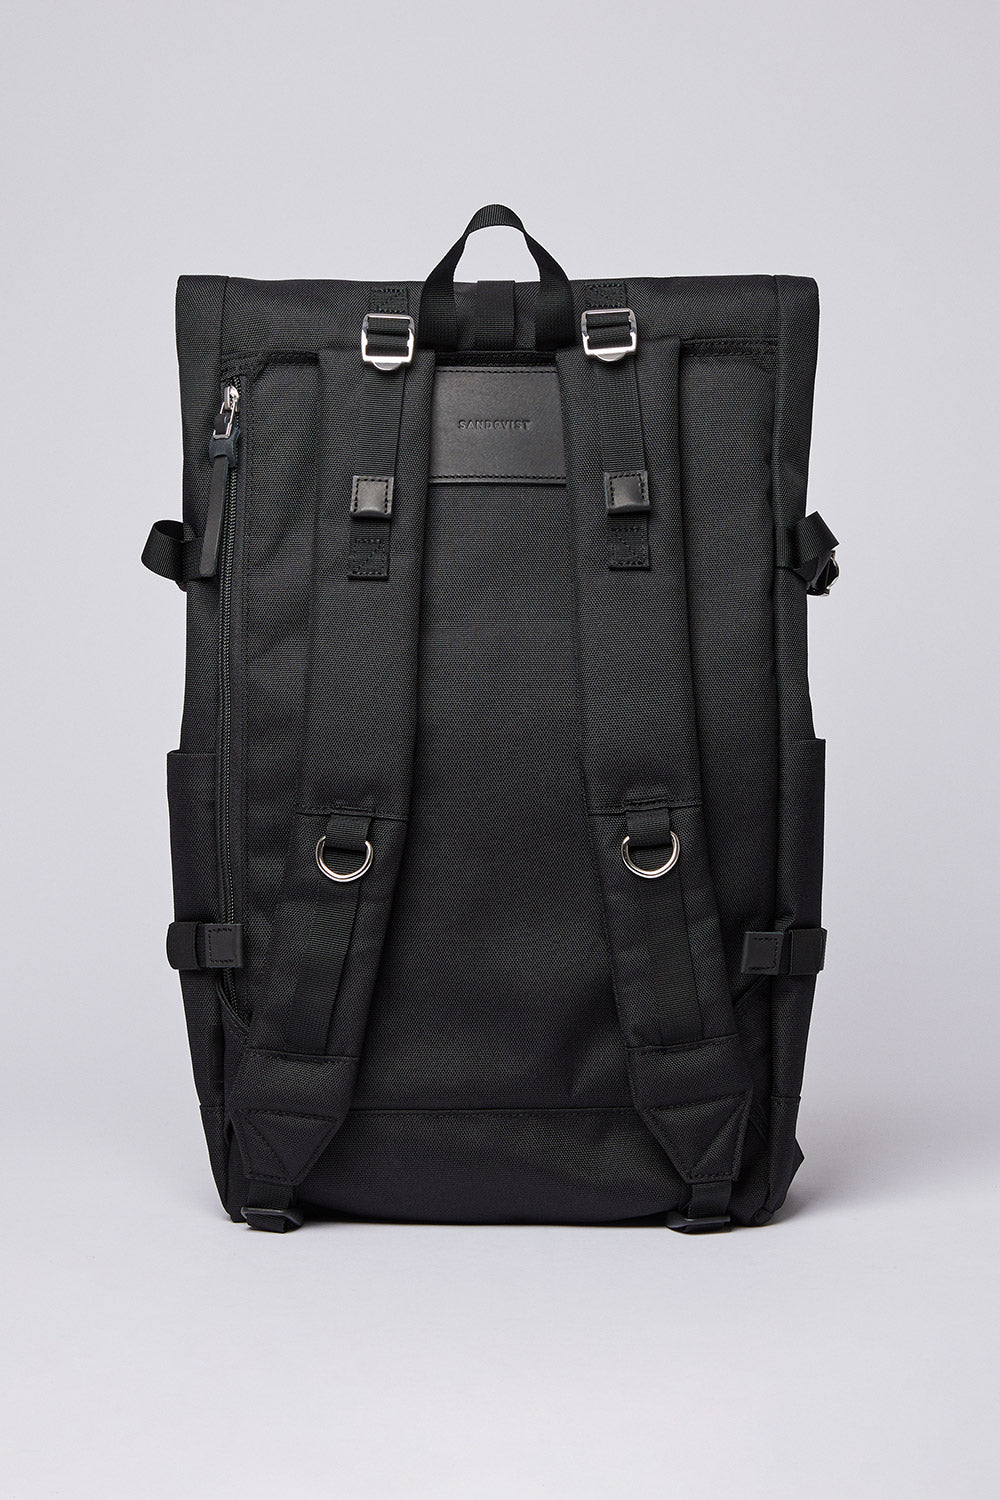 Sandqvist Bernt Backpack (Black)